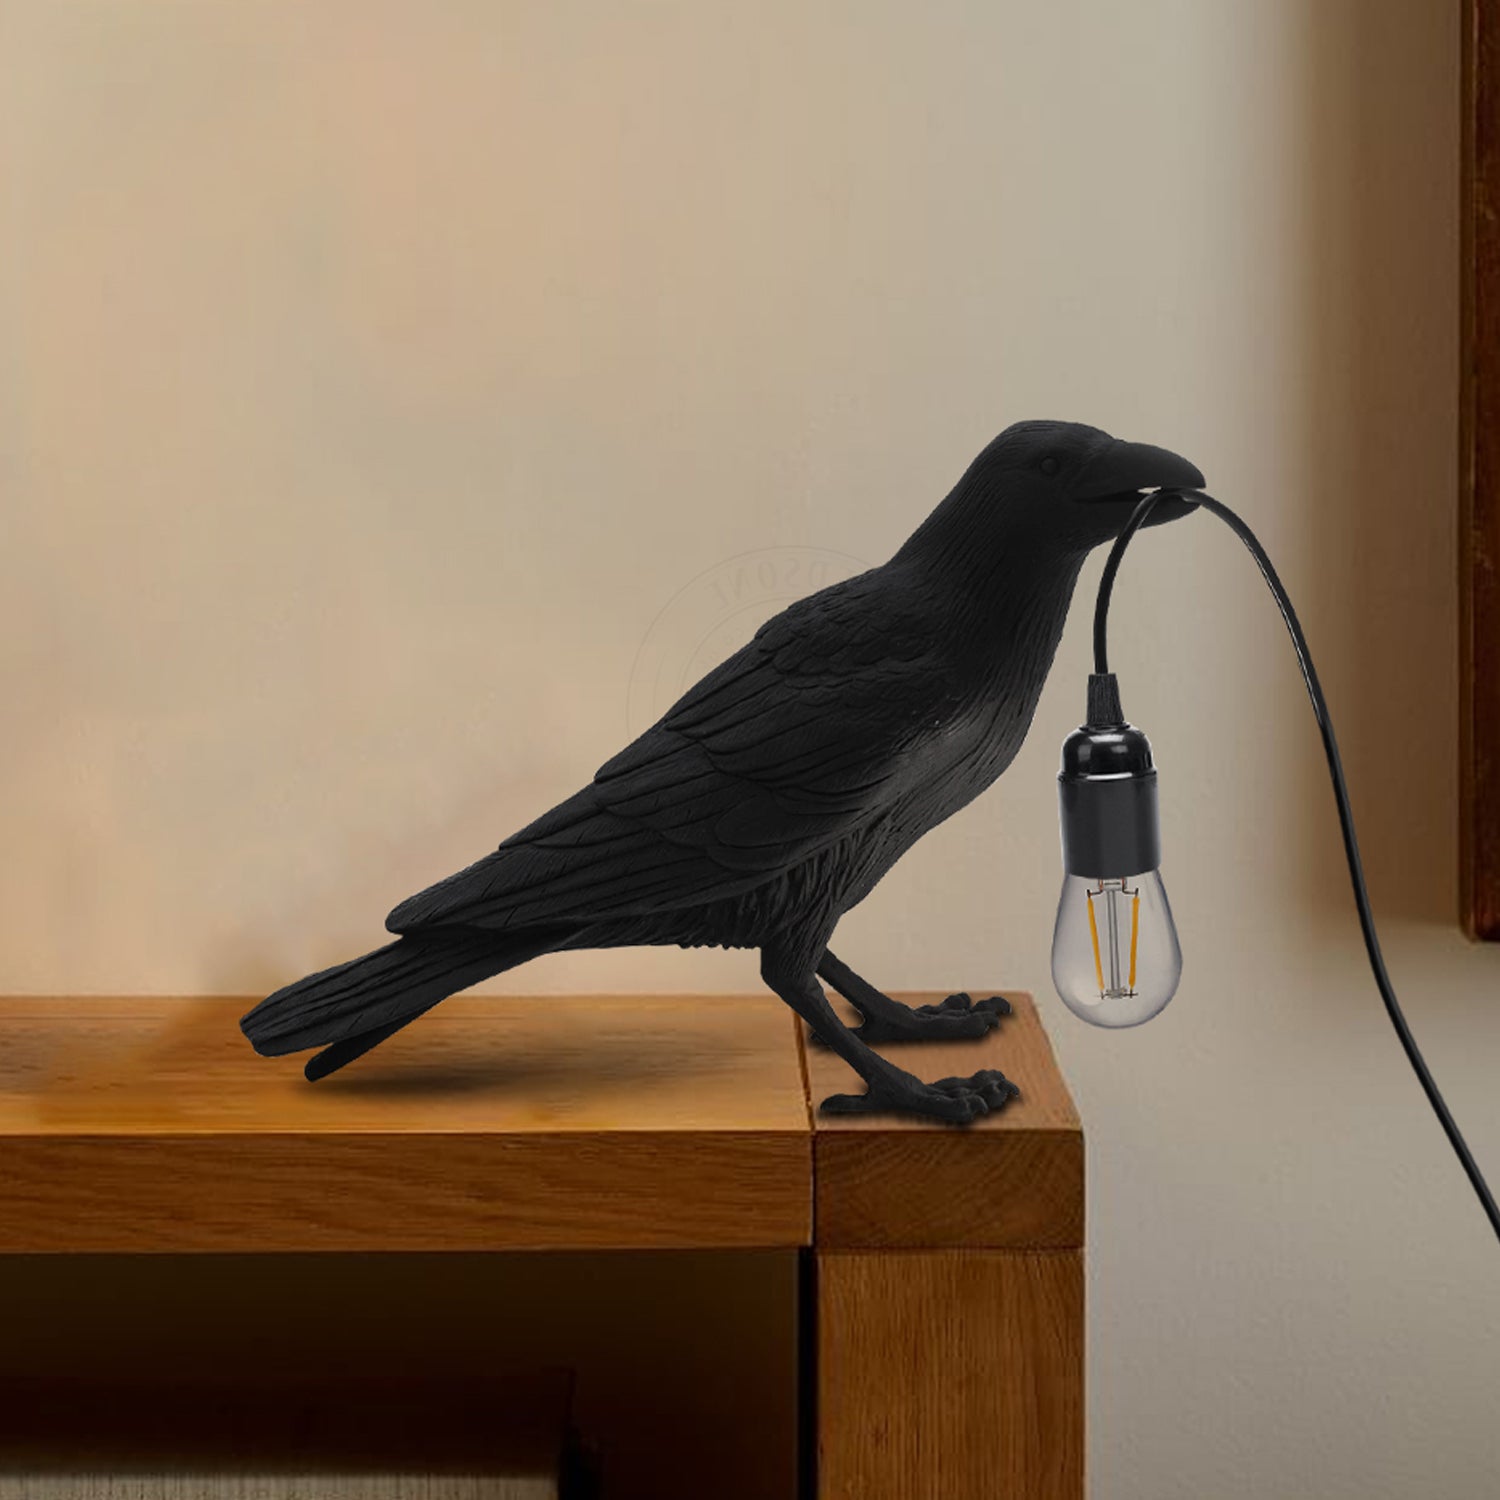 Black Raven Table Lamps on Desk